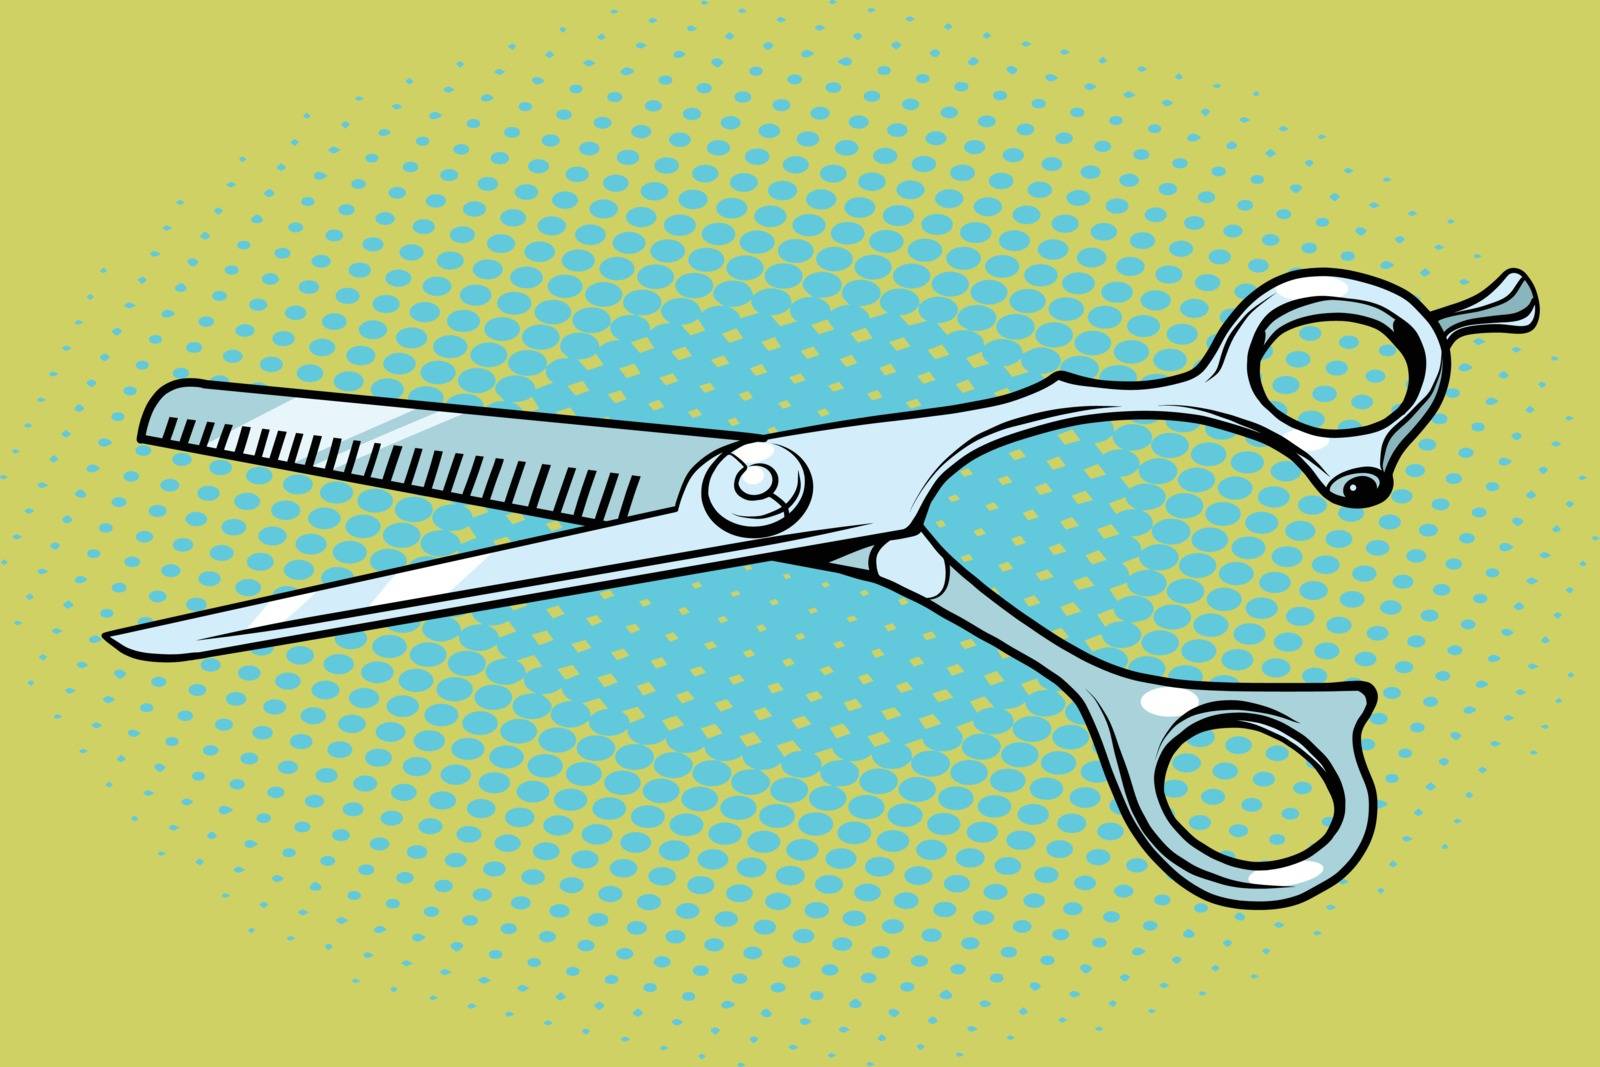 Metal Barber scissors. Pop art retro vector illustration